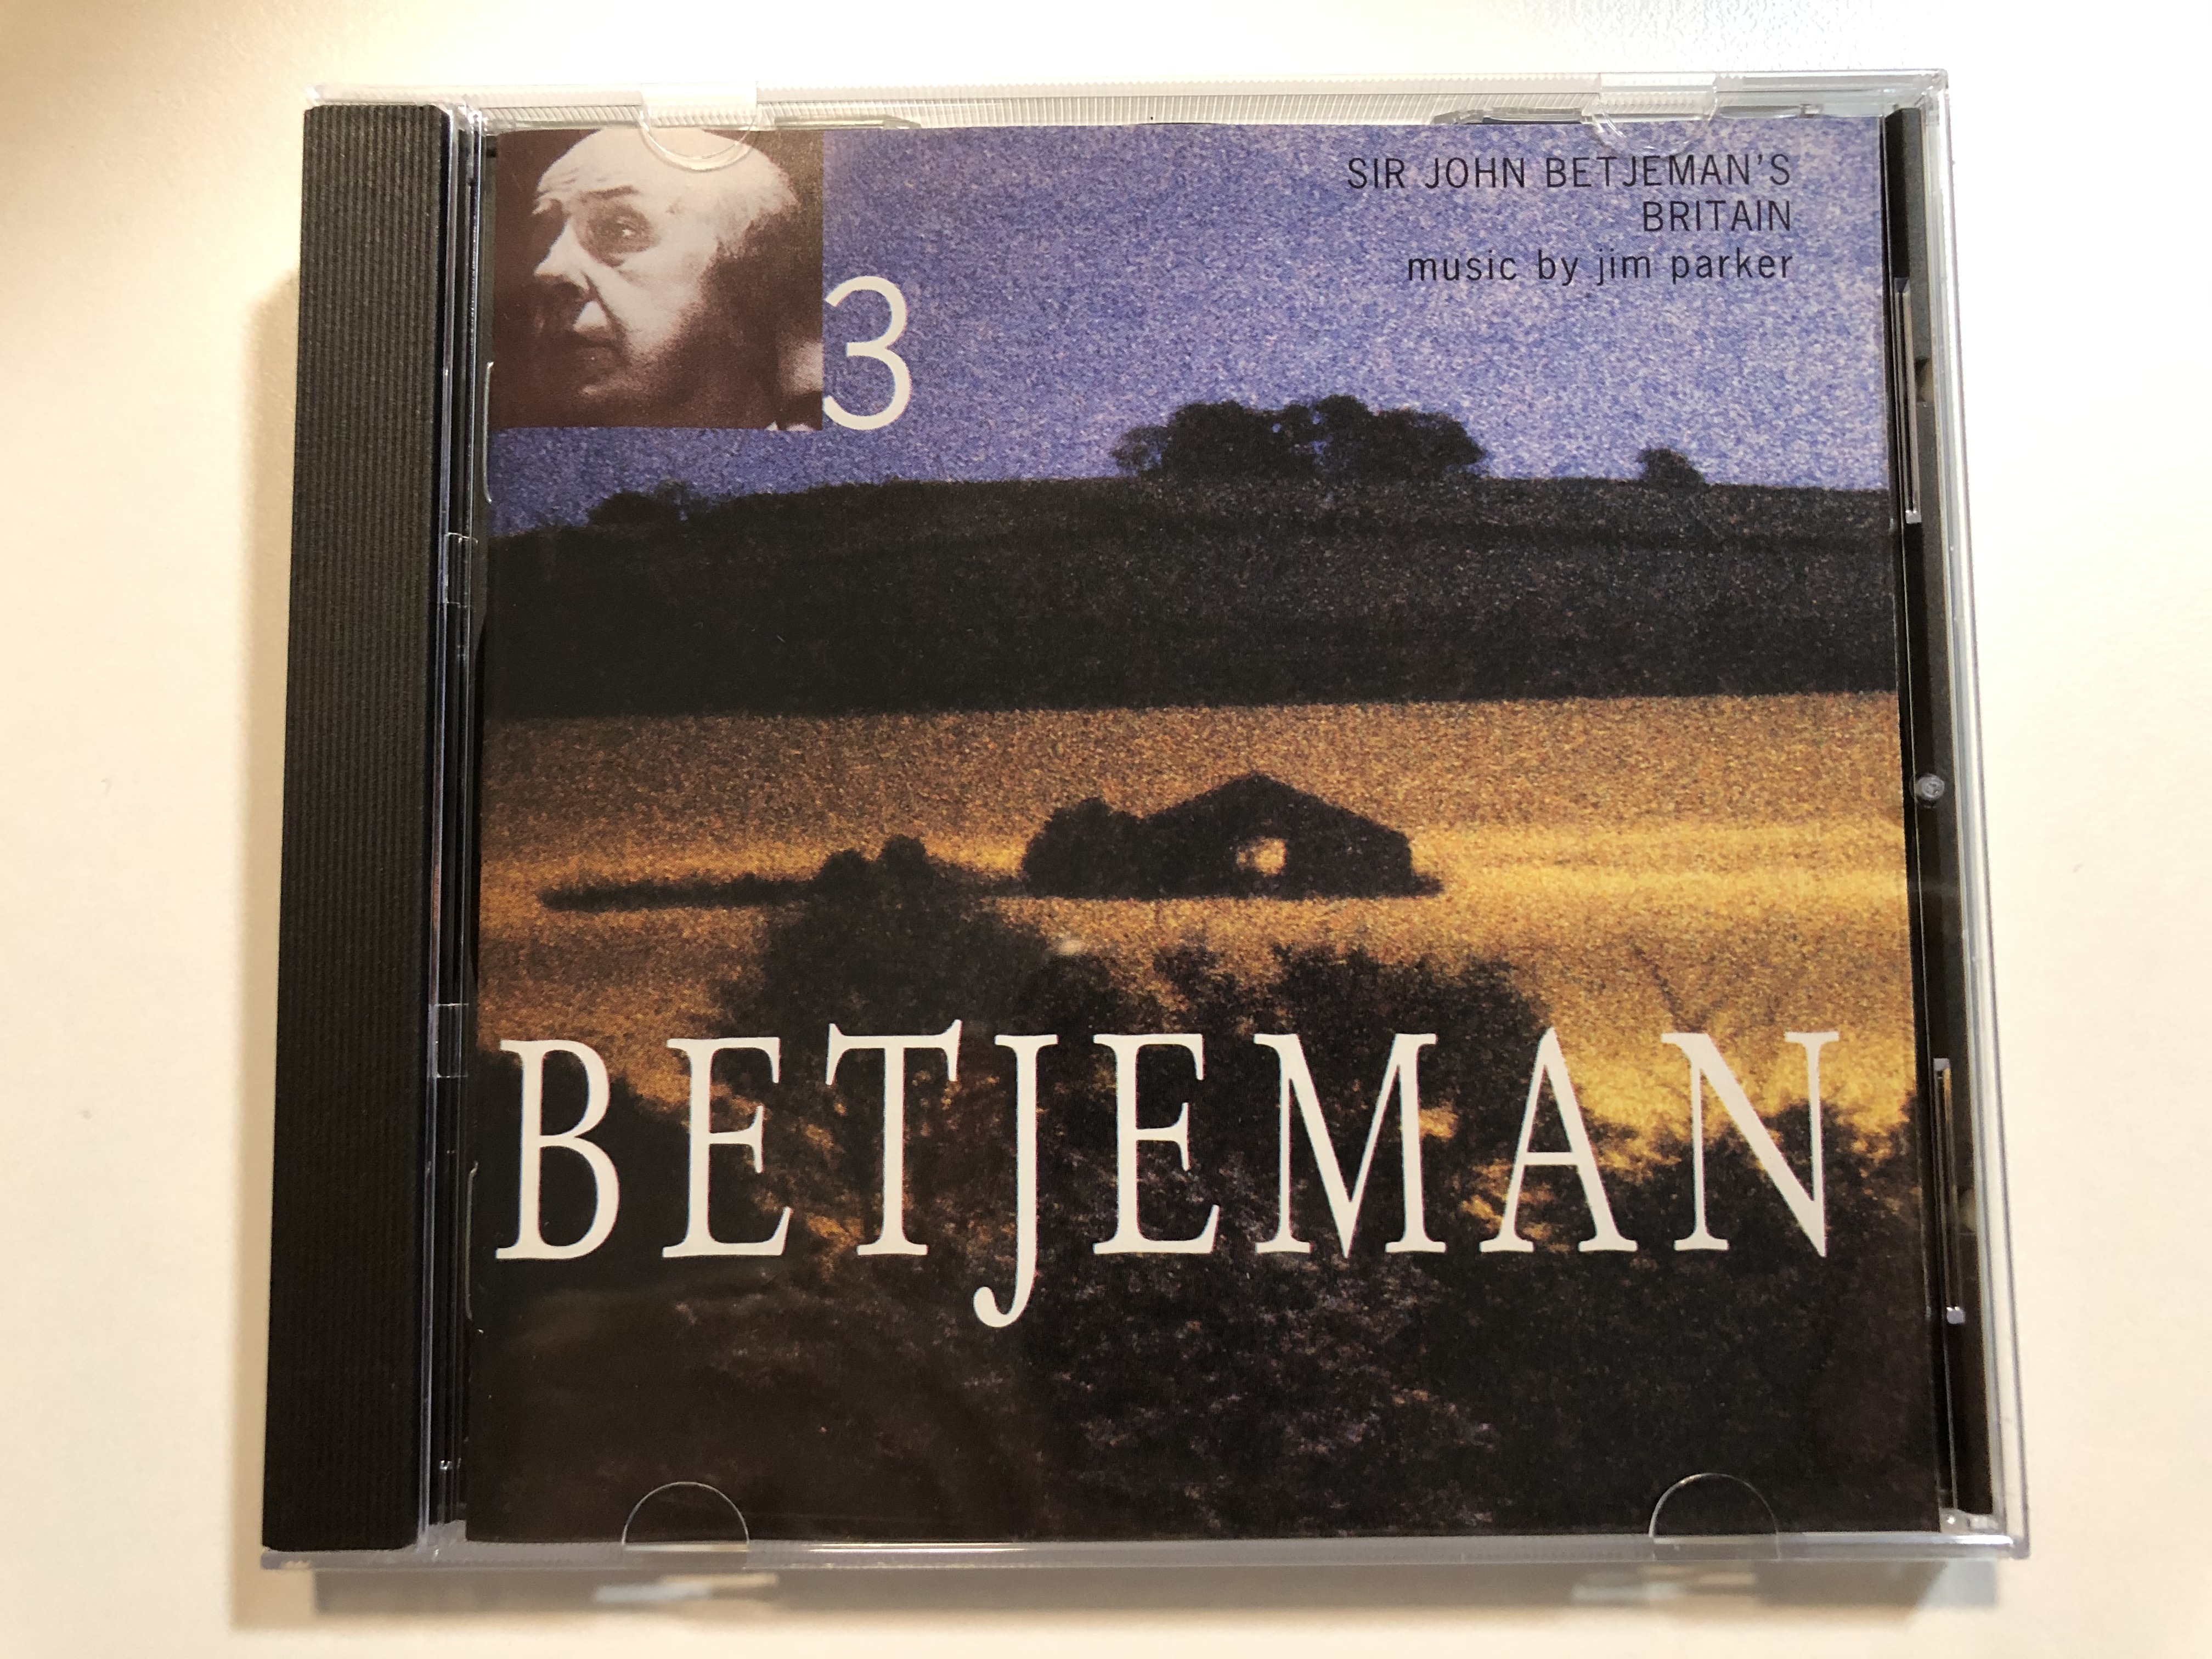 sir-john-betjeman-s-britain-music-by-jim-parker-virgin-records-audio-cd-1991-stereo-cascd-1130-1-.jpg